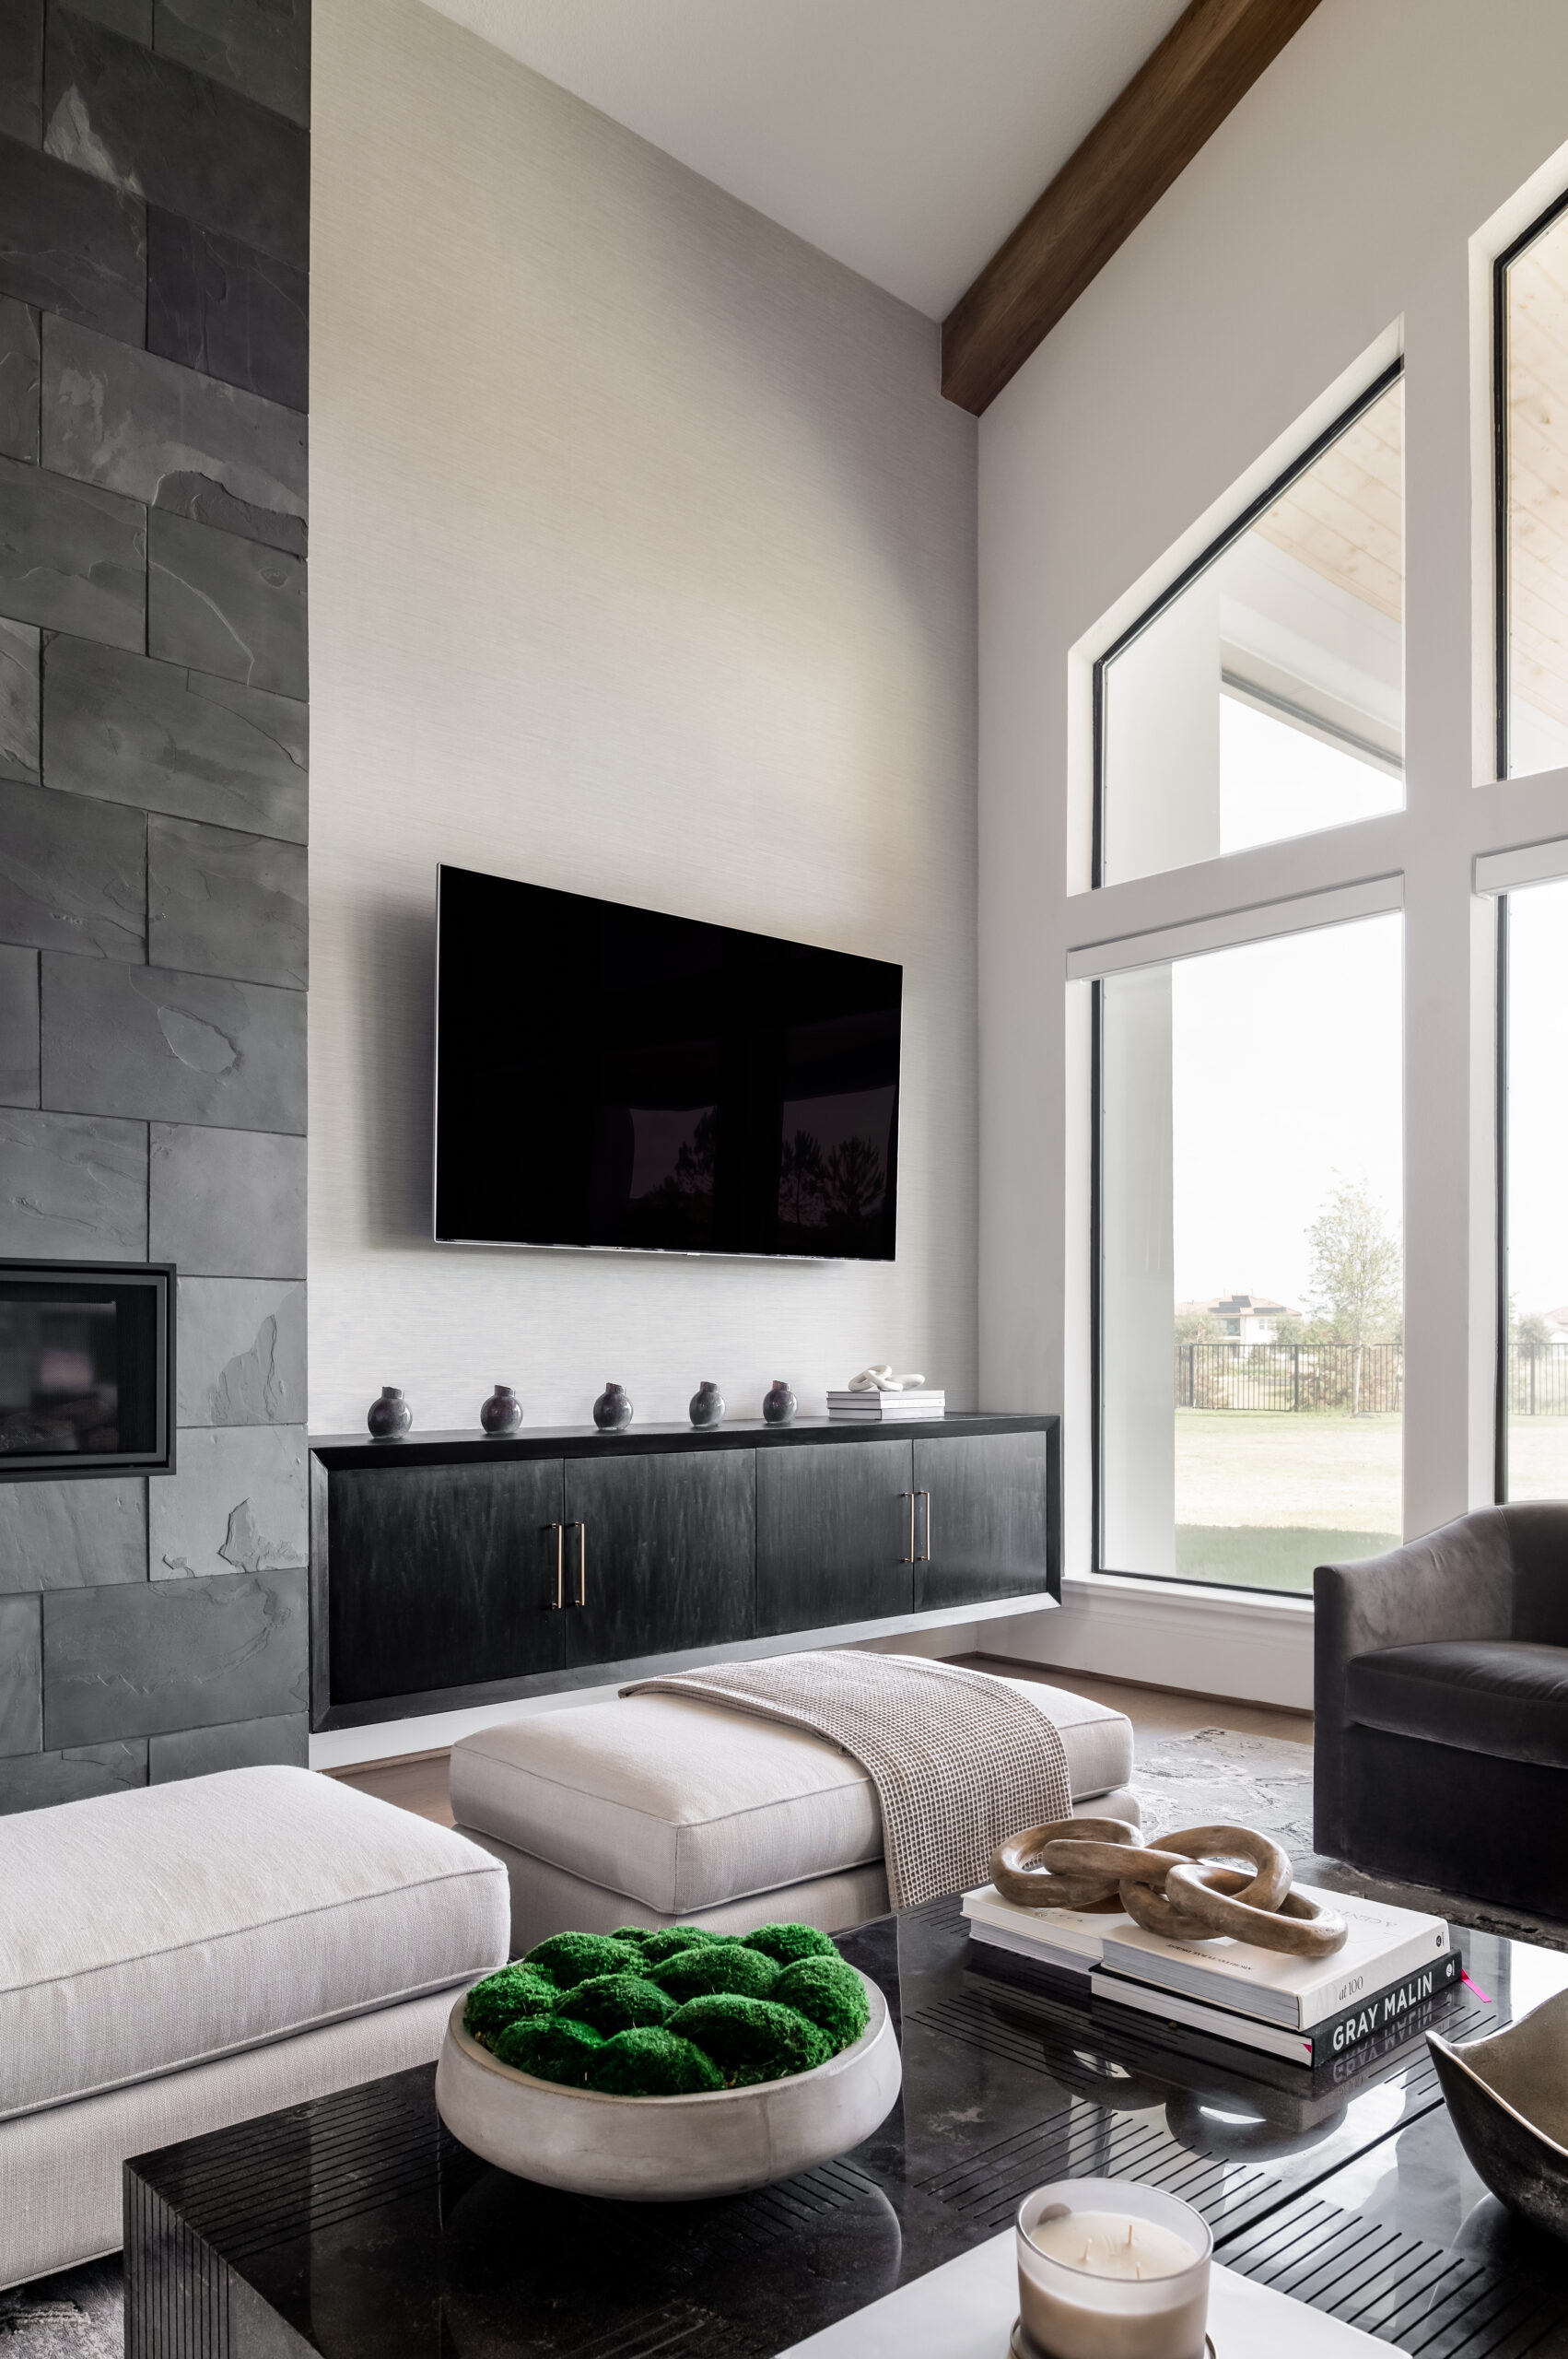 Living room interior design with modern interior design furniture and decor